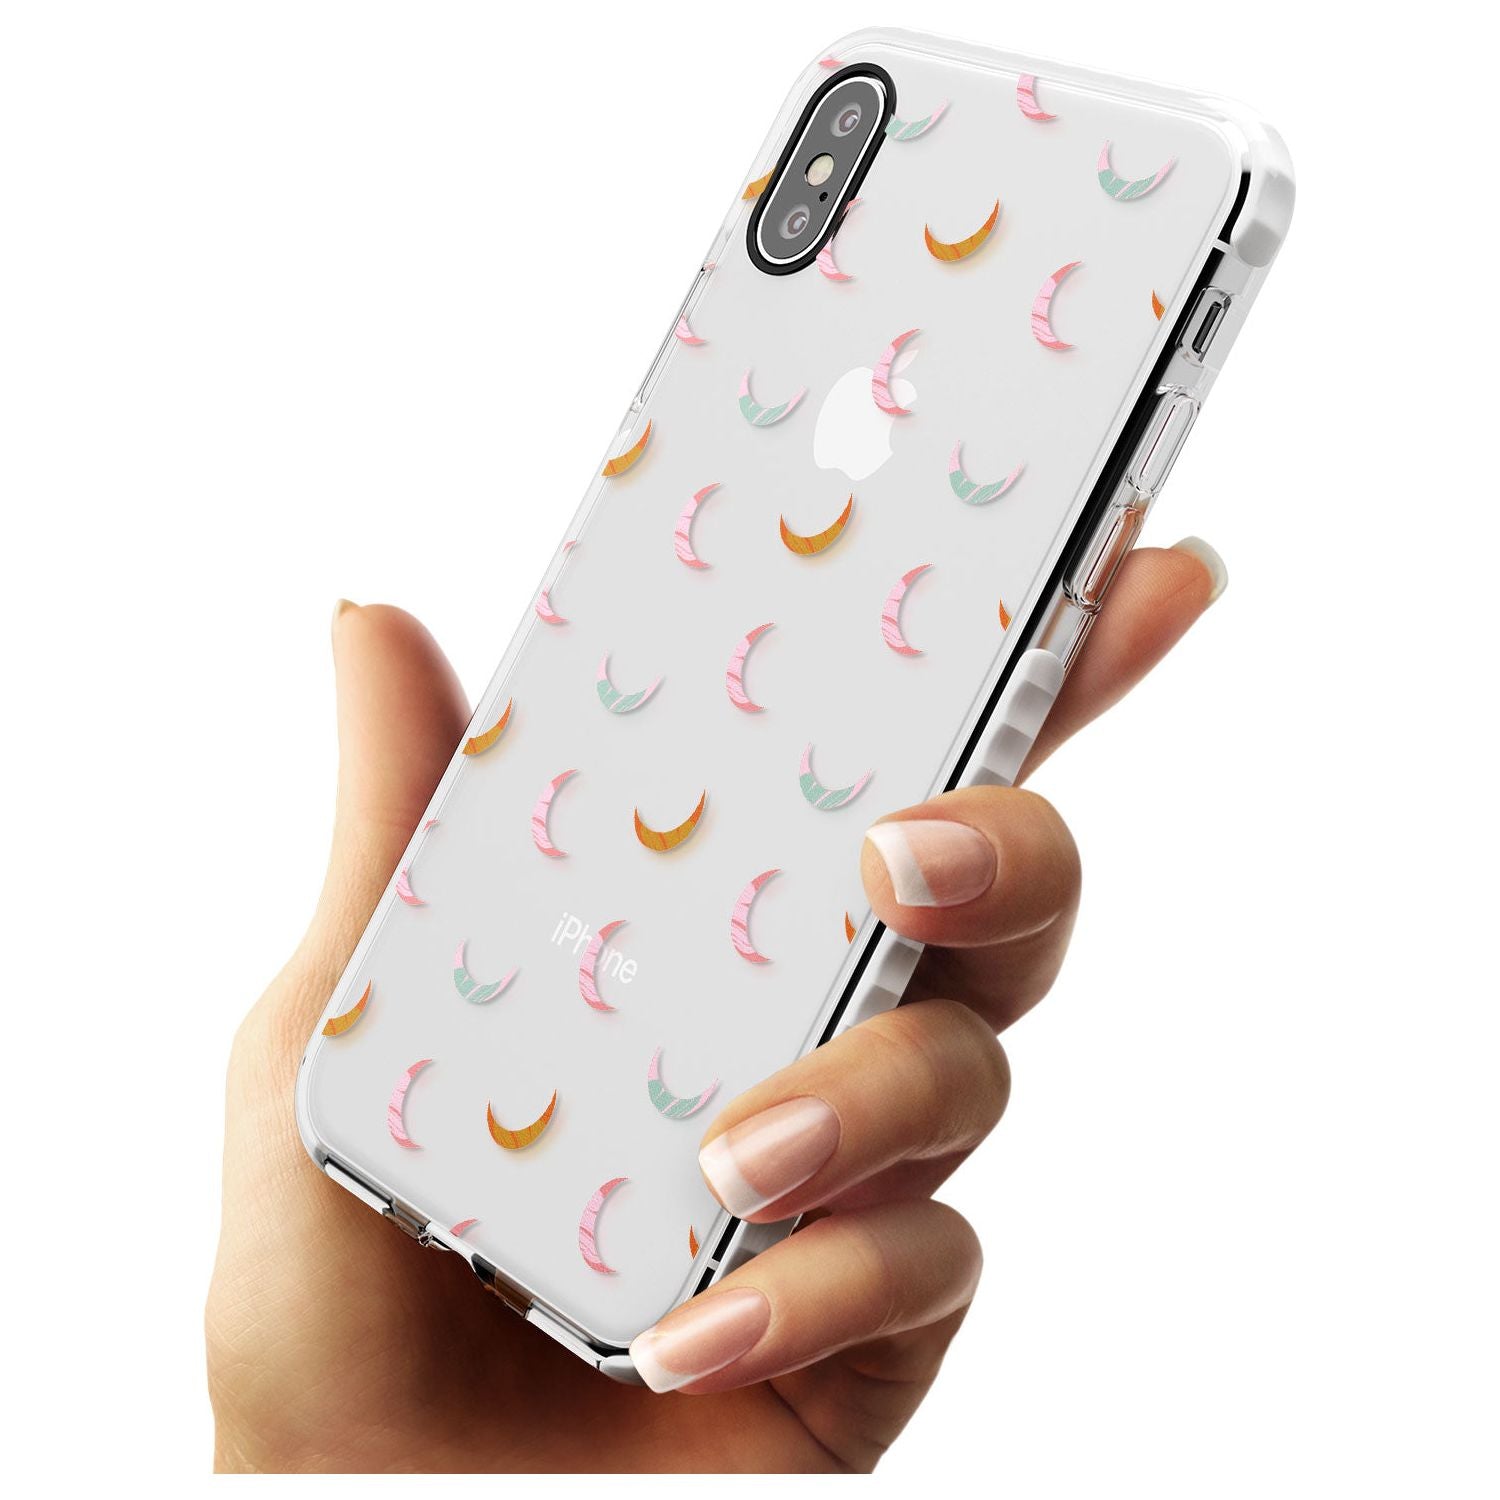 Colourful Crescent Moons Slim TPU Phone Case Warehouse X XS Max XR